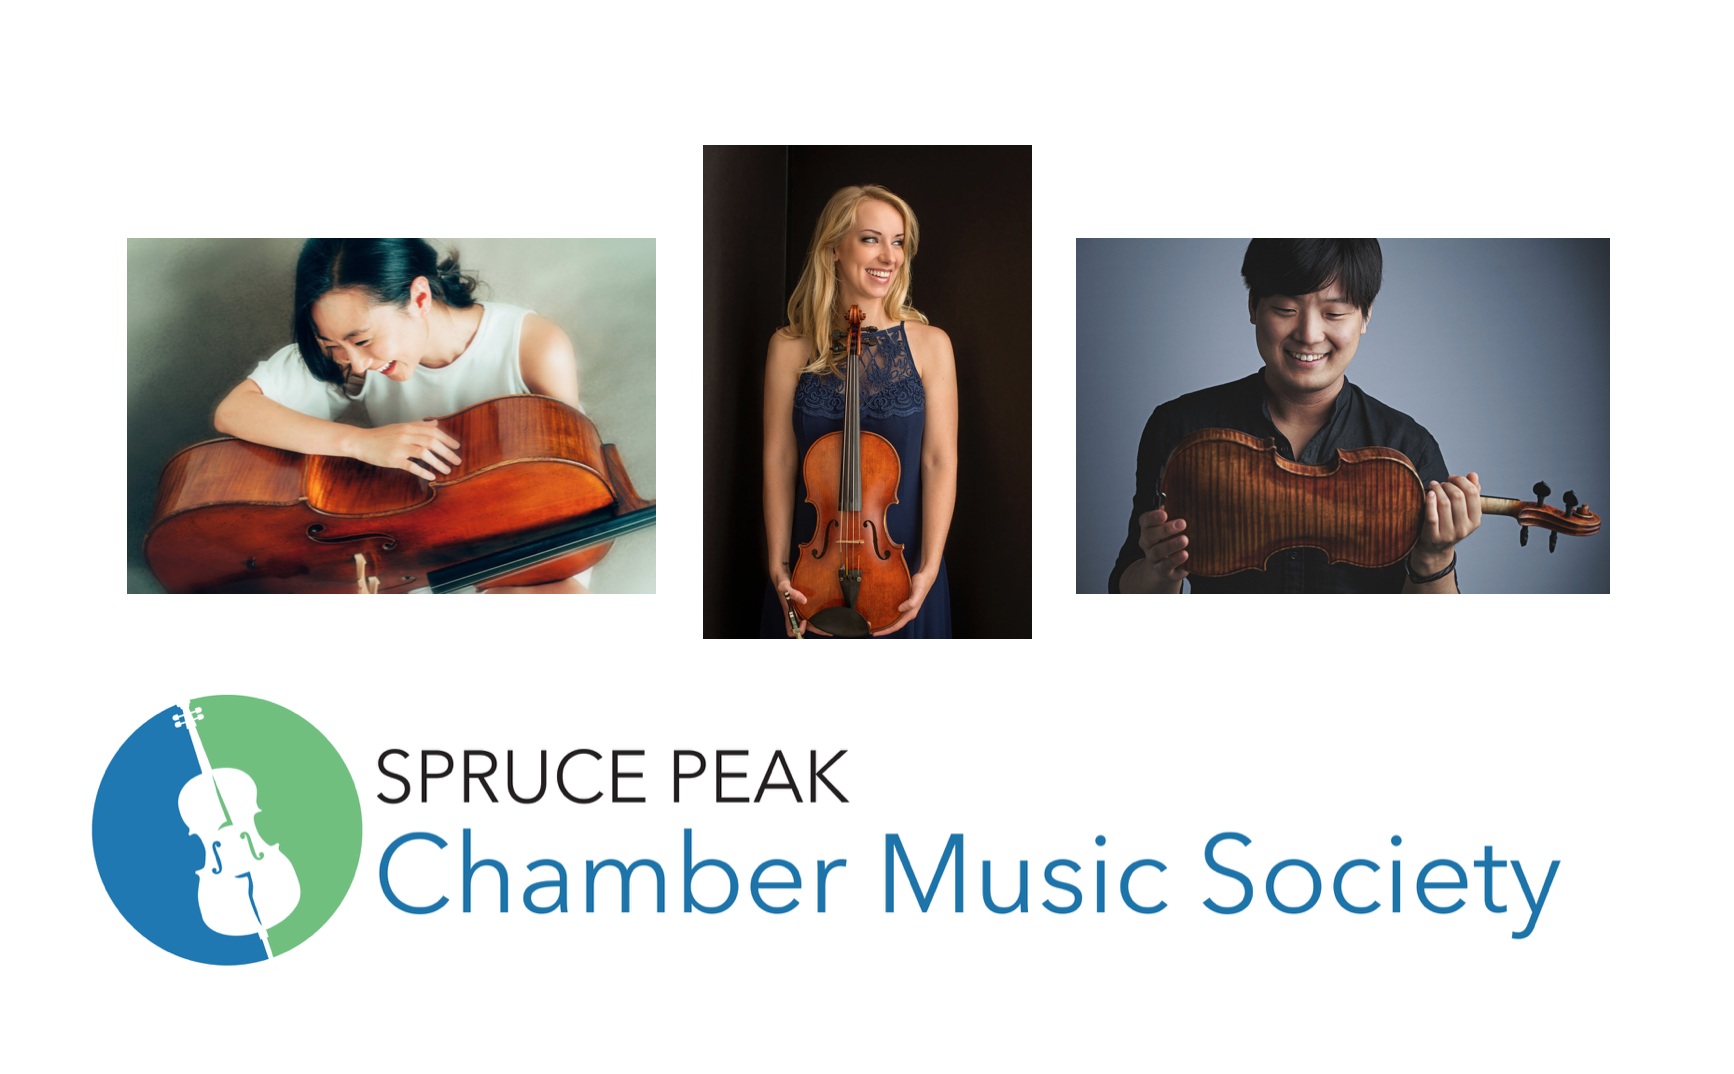 Portraits of musicians - Jia Kim (cello), Molly Carr (viola), Siwoo Kim (violin)